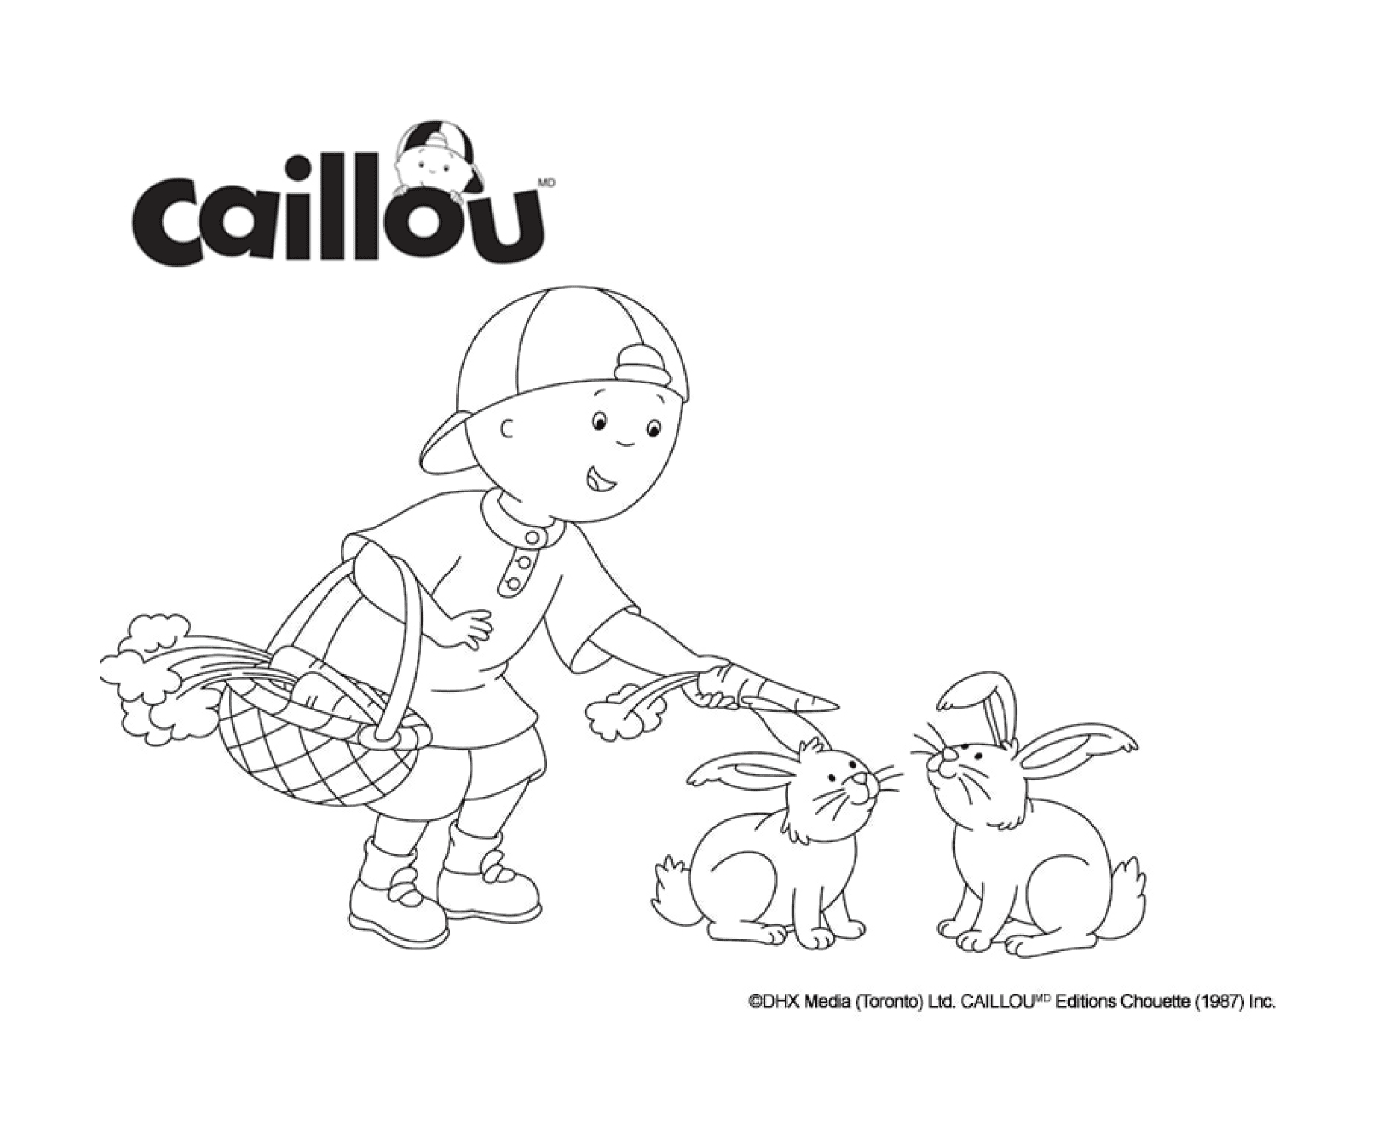  Caillou gives carrots to rabbits 